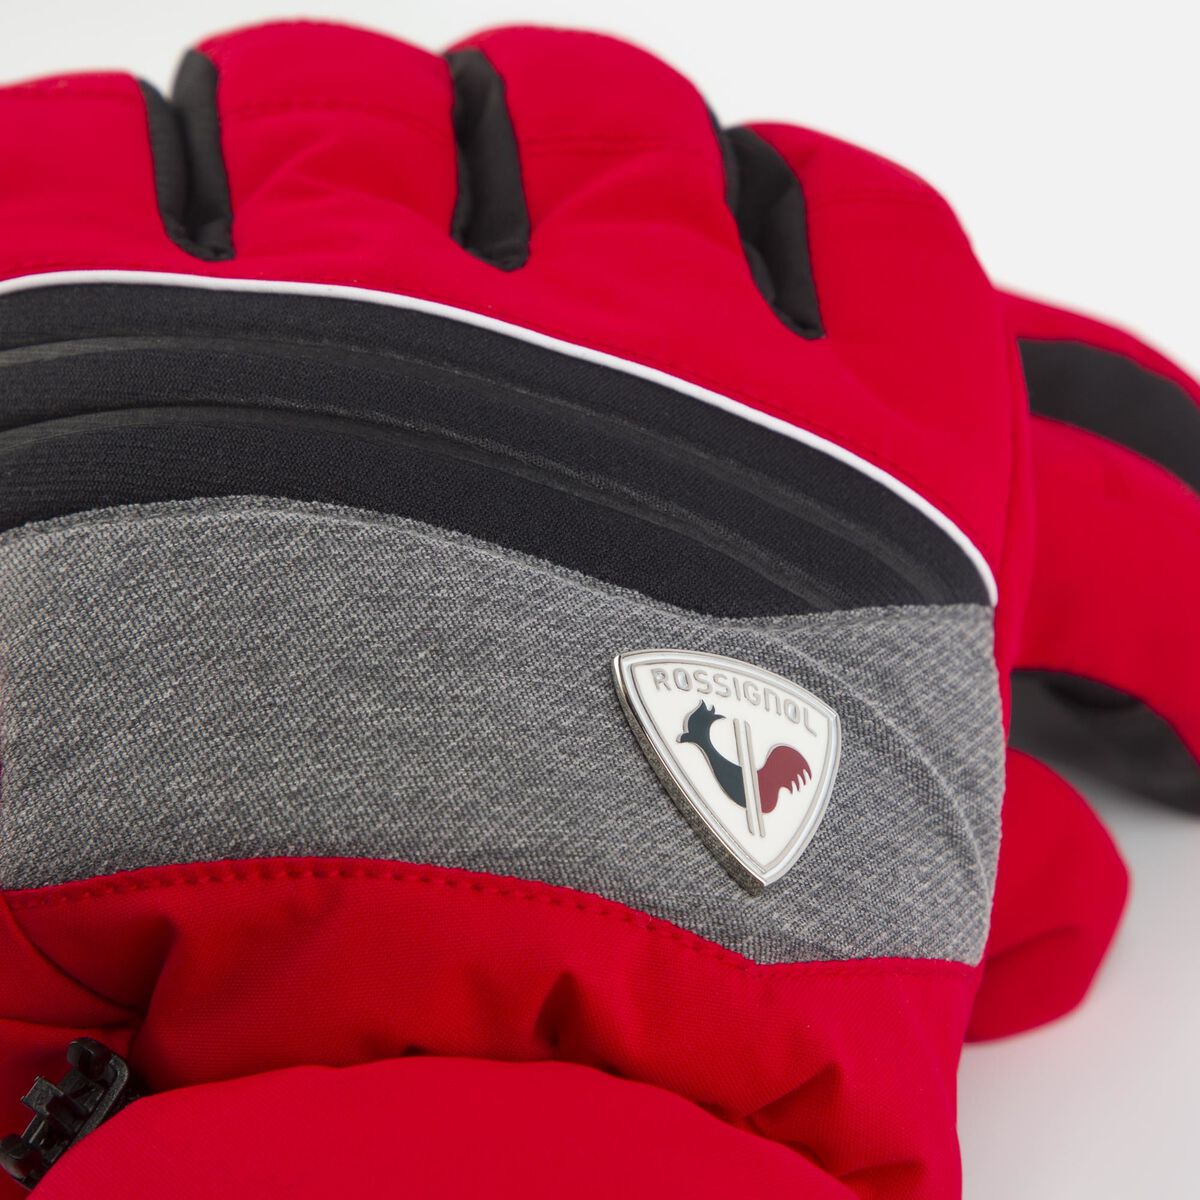 Men's Legend waterproof ski gloves